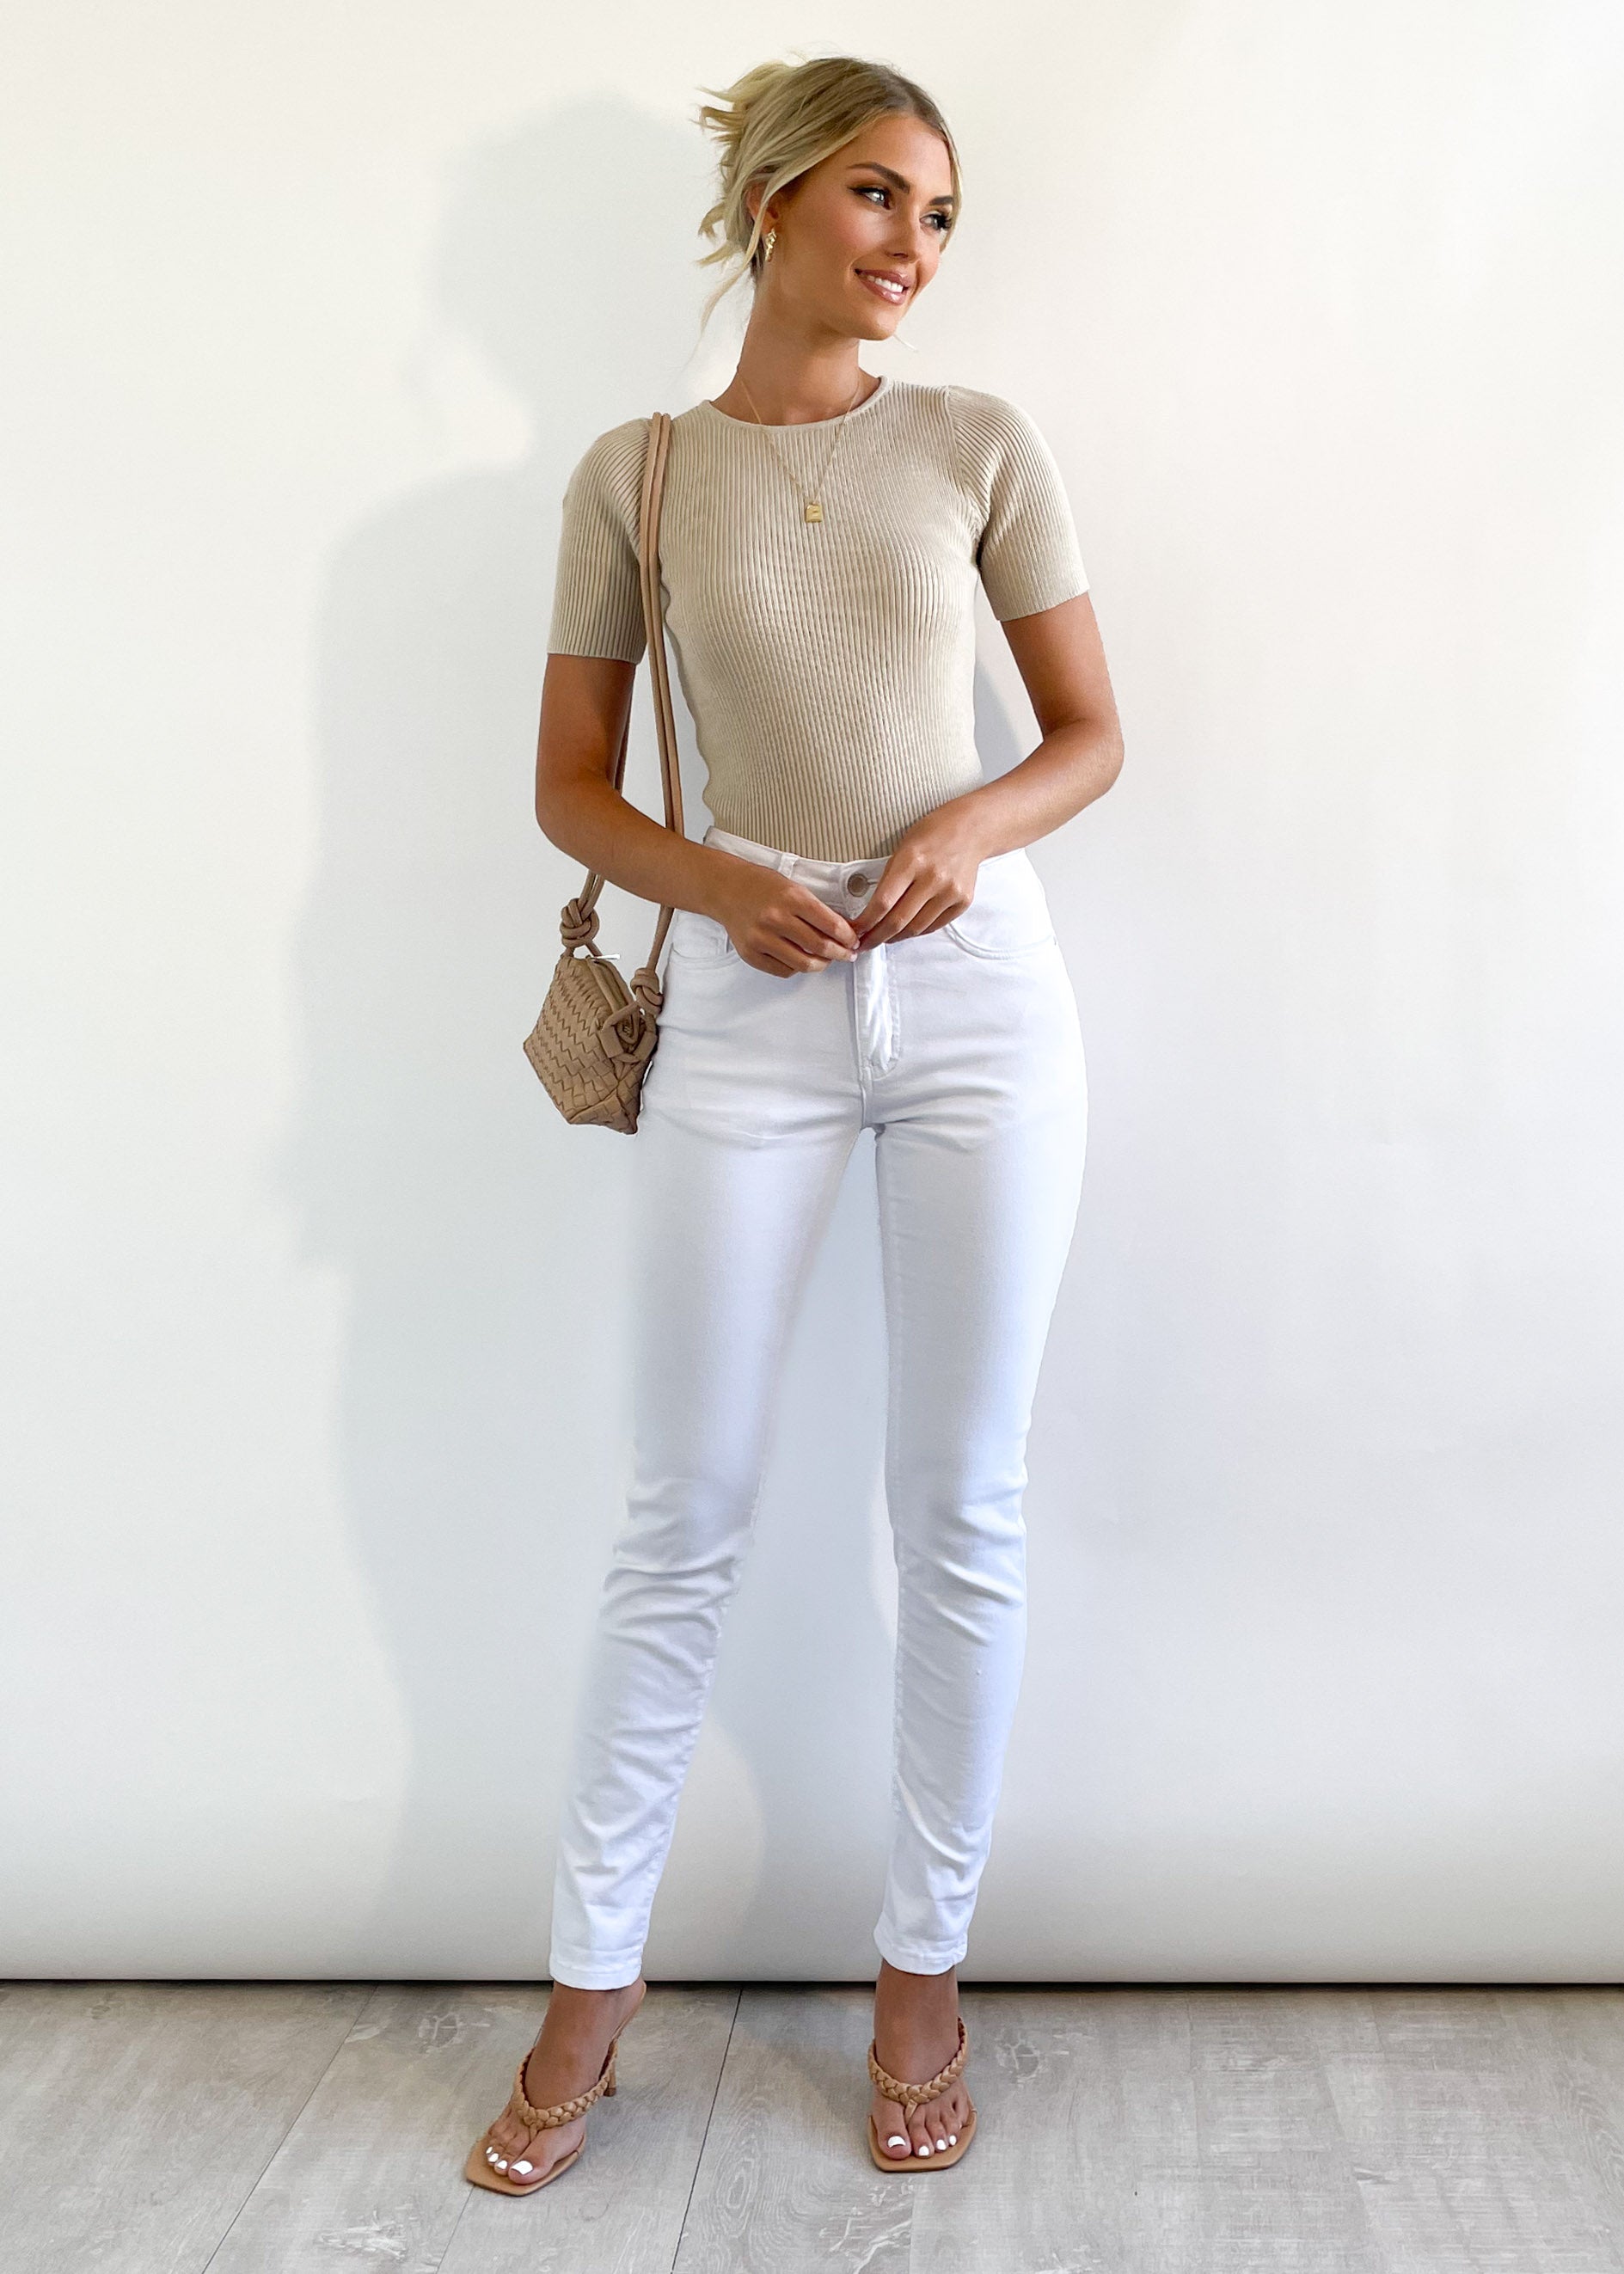 Canada Stretch Jeans - White